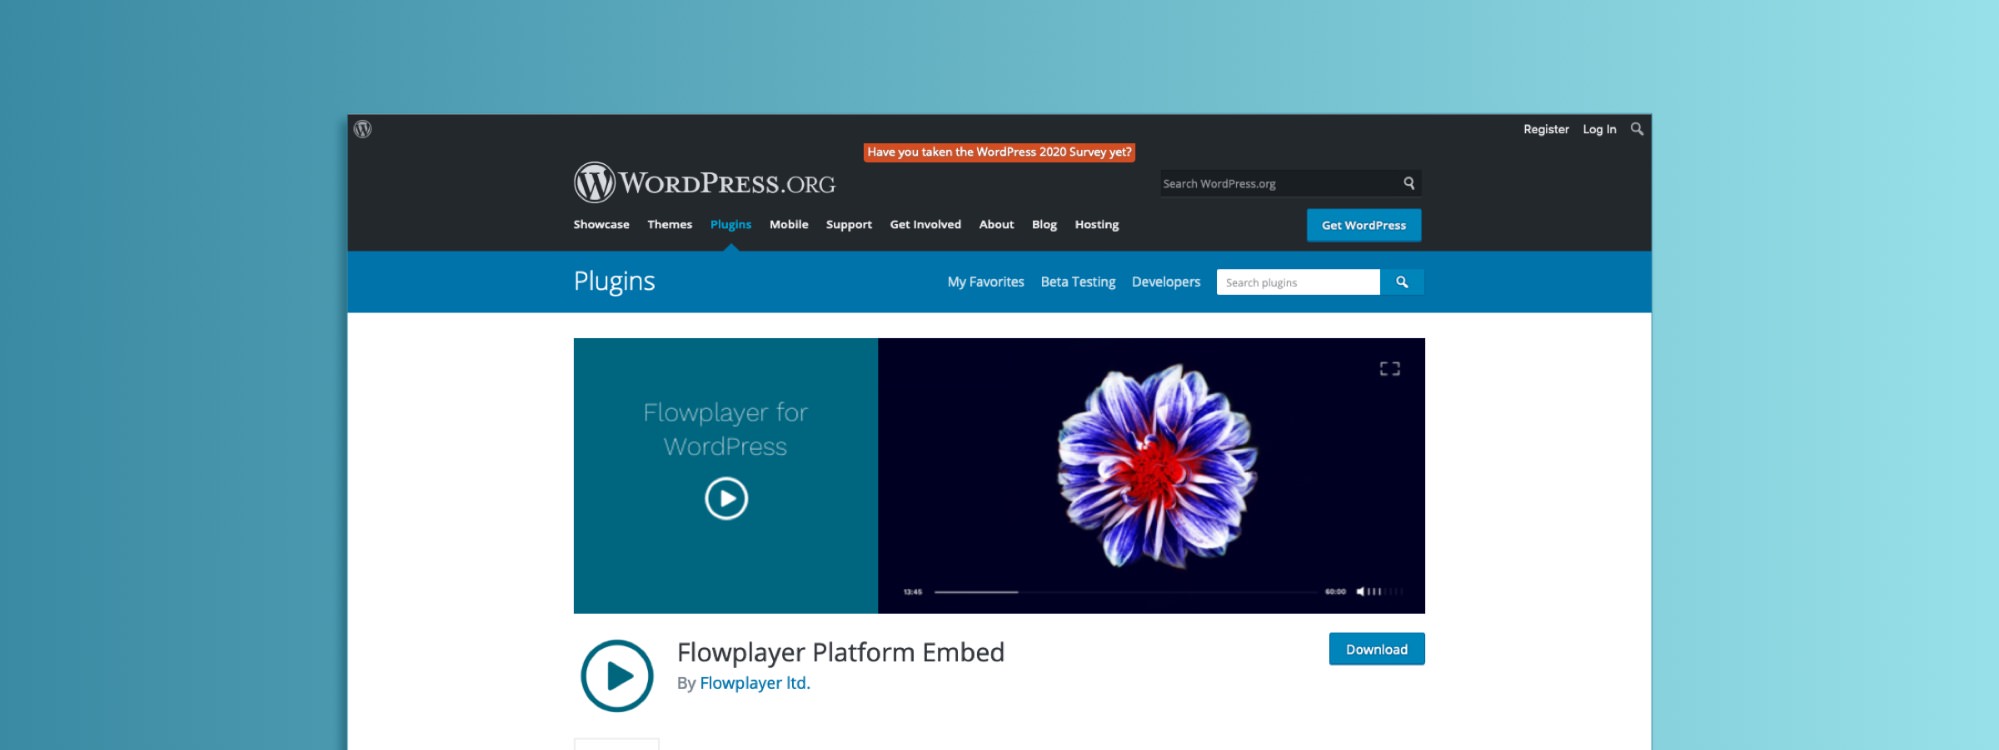 WordPress Video: Choosing a Player & Hosting Option